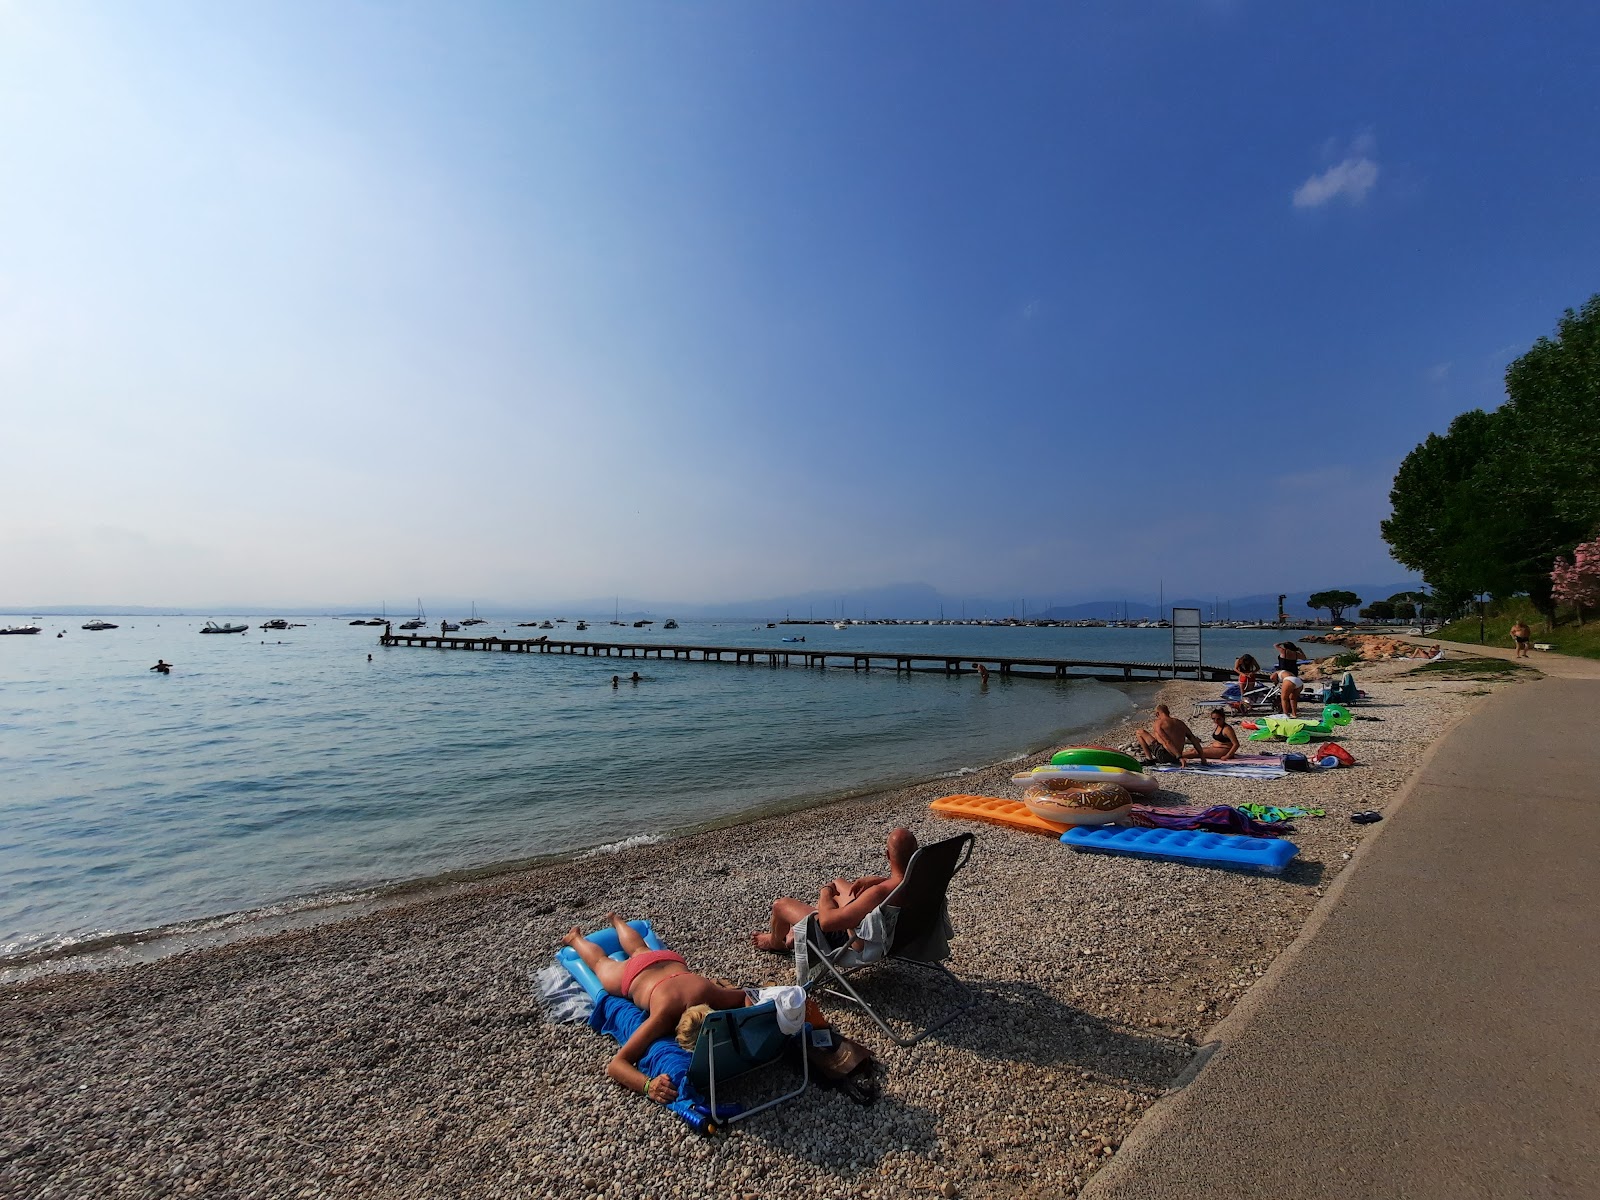 Foto von Spiaggia porto di Pacengo mit feiner grauer kies Oberfläche